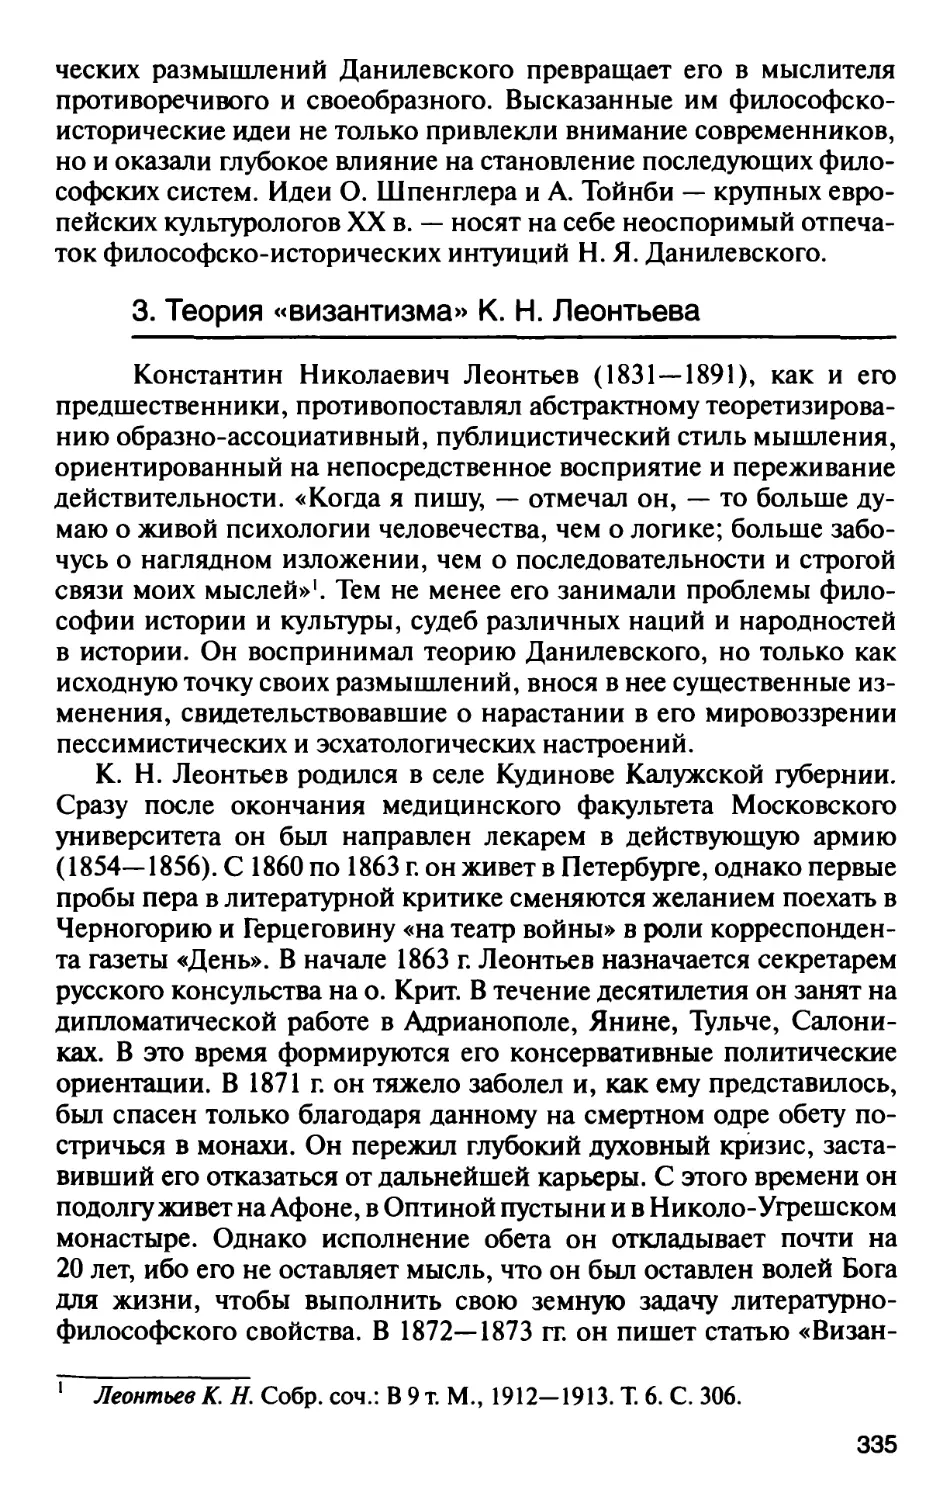 3. Теория «византизма» К.Н. Леонтьева